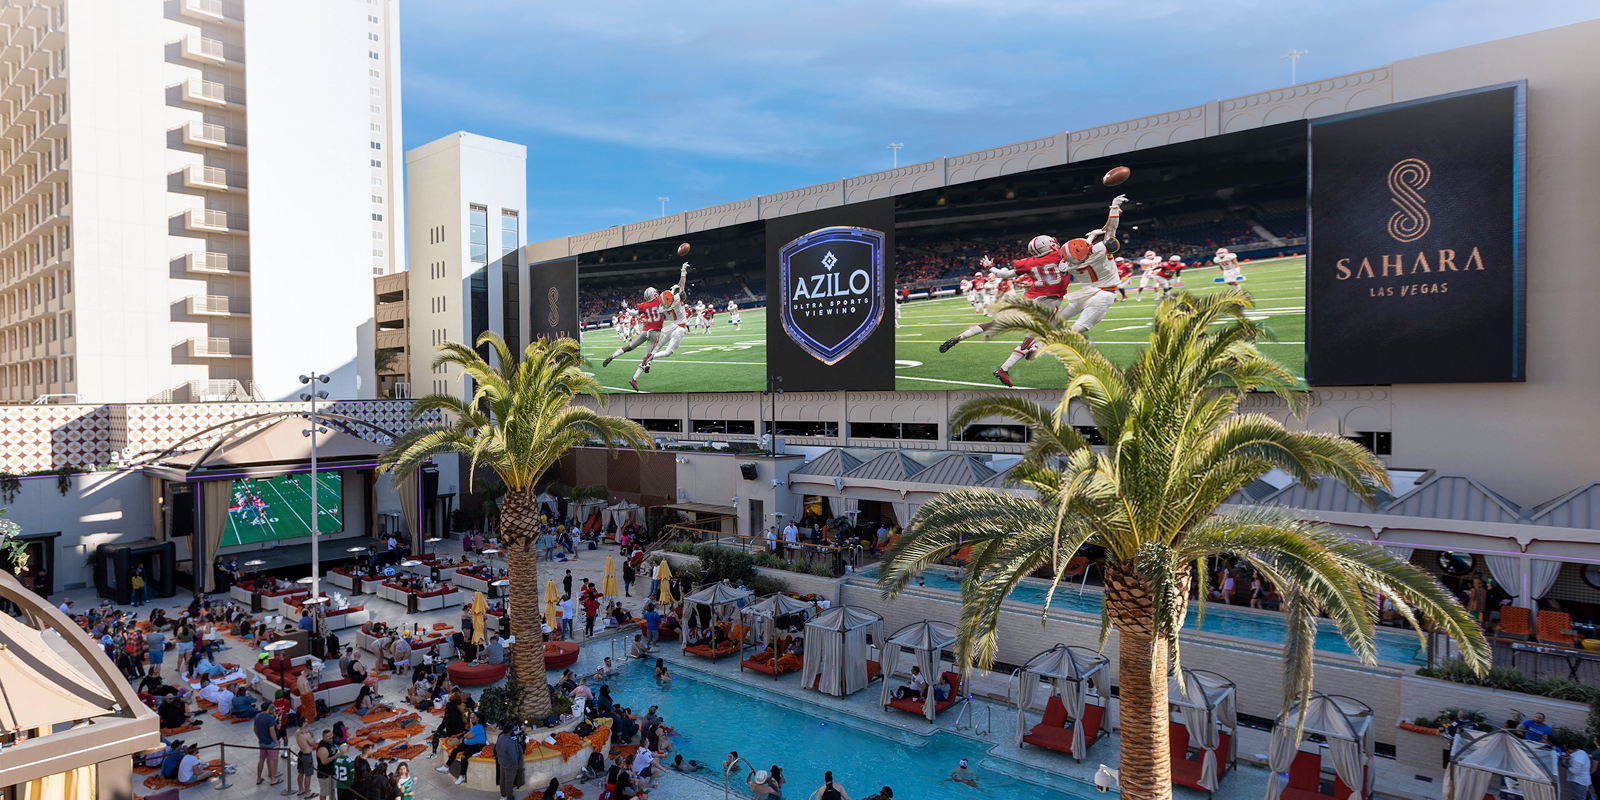 AZILO Las Vegas showing sports on the big screens